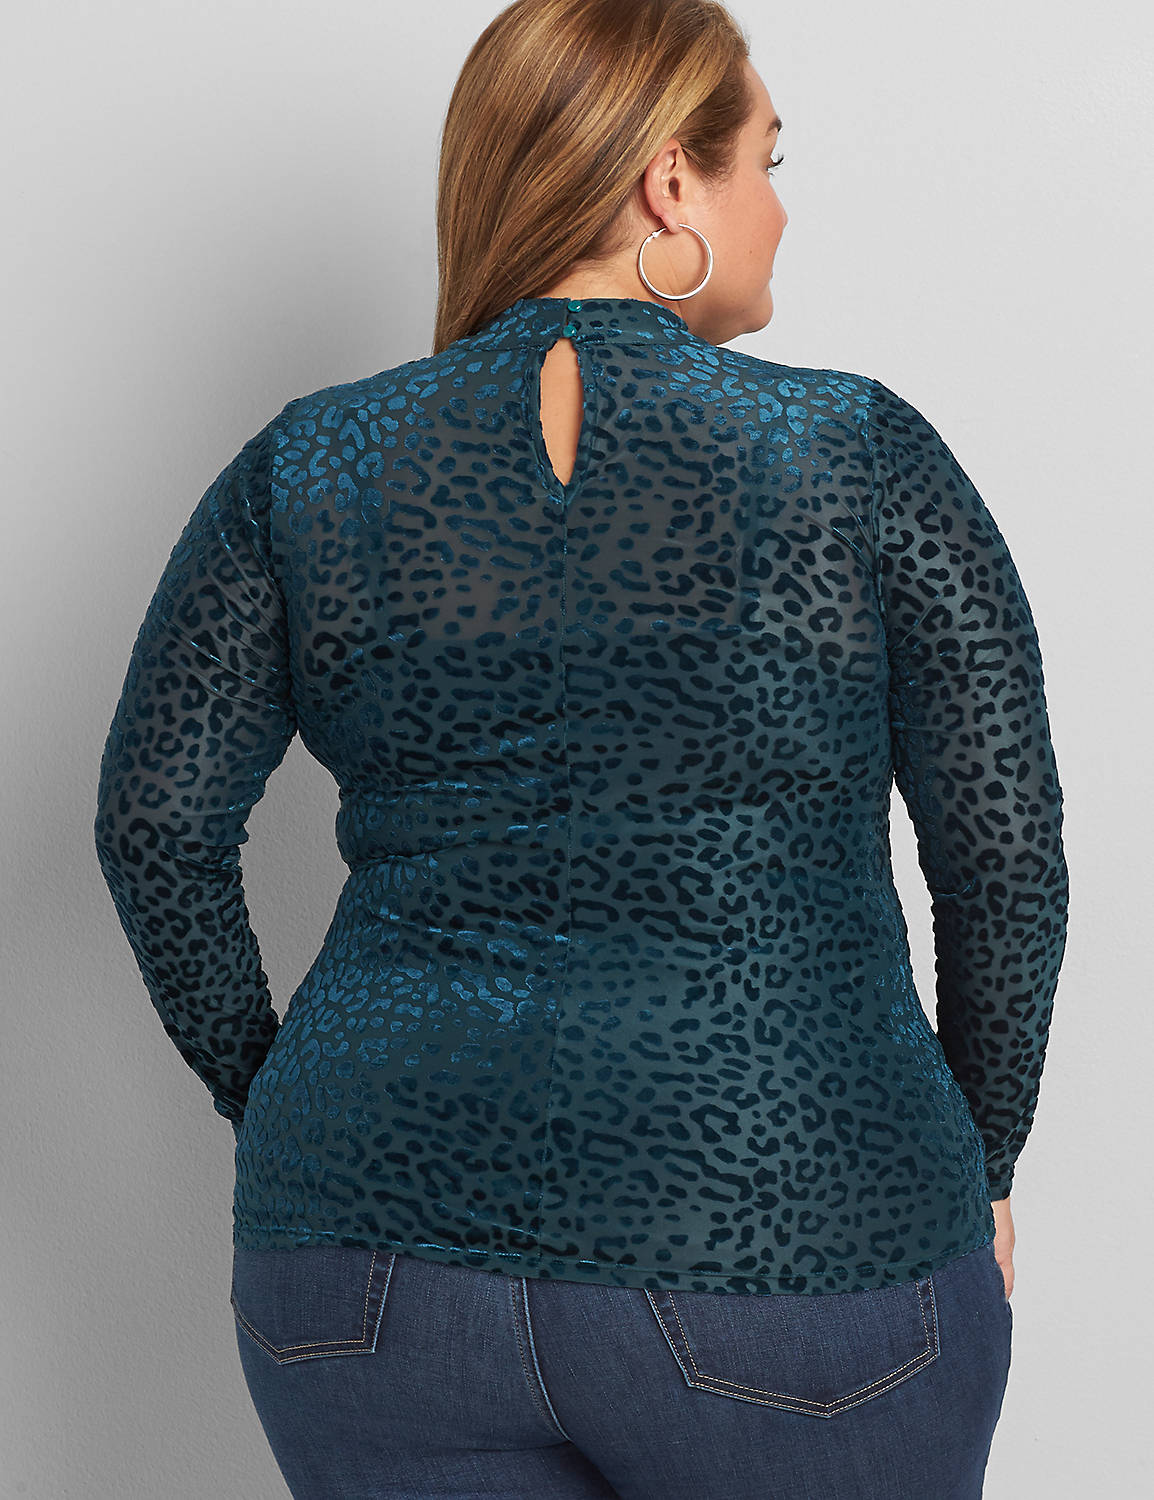 Mock-Neck Leopard Print Sheer Mesh Top Product Image 2